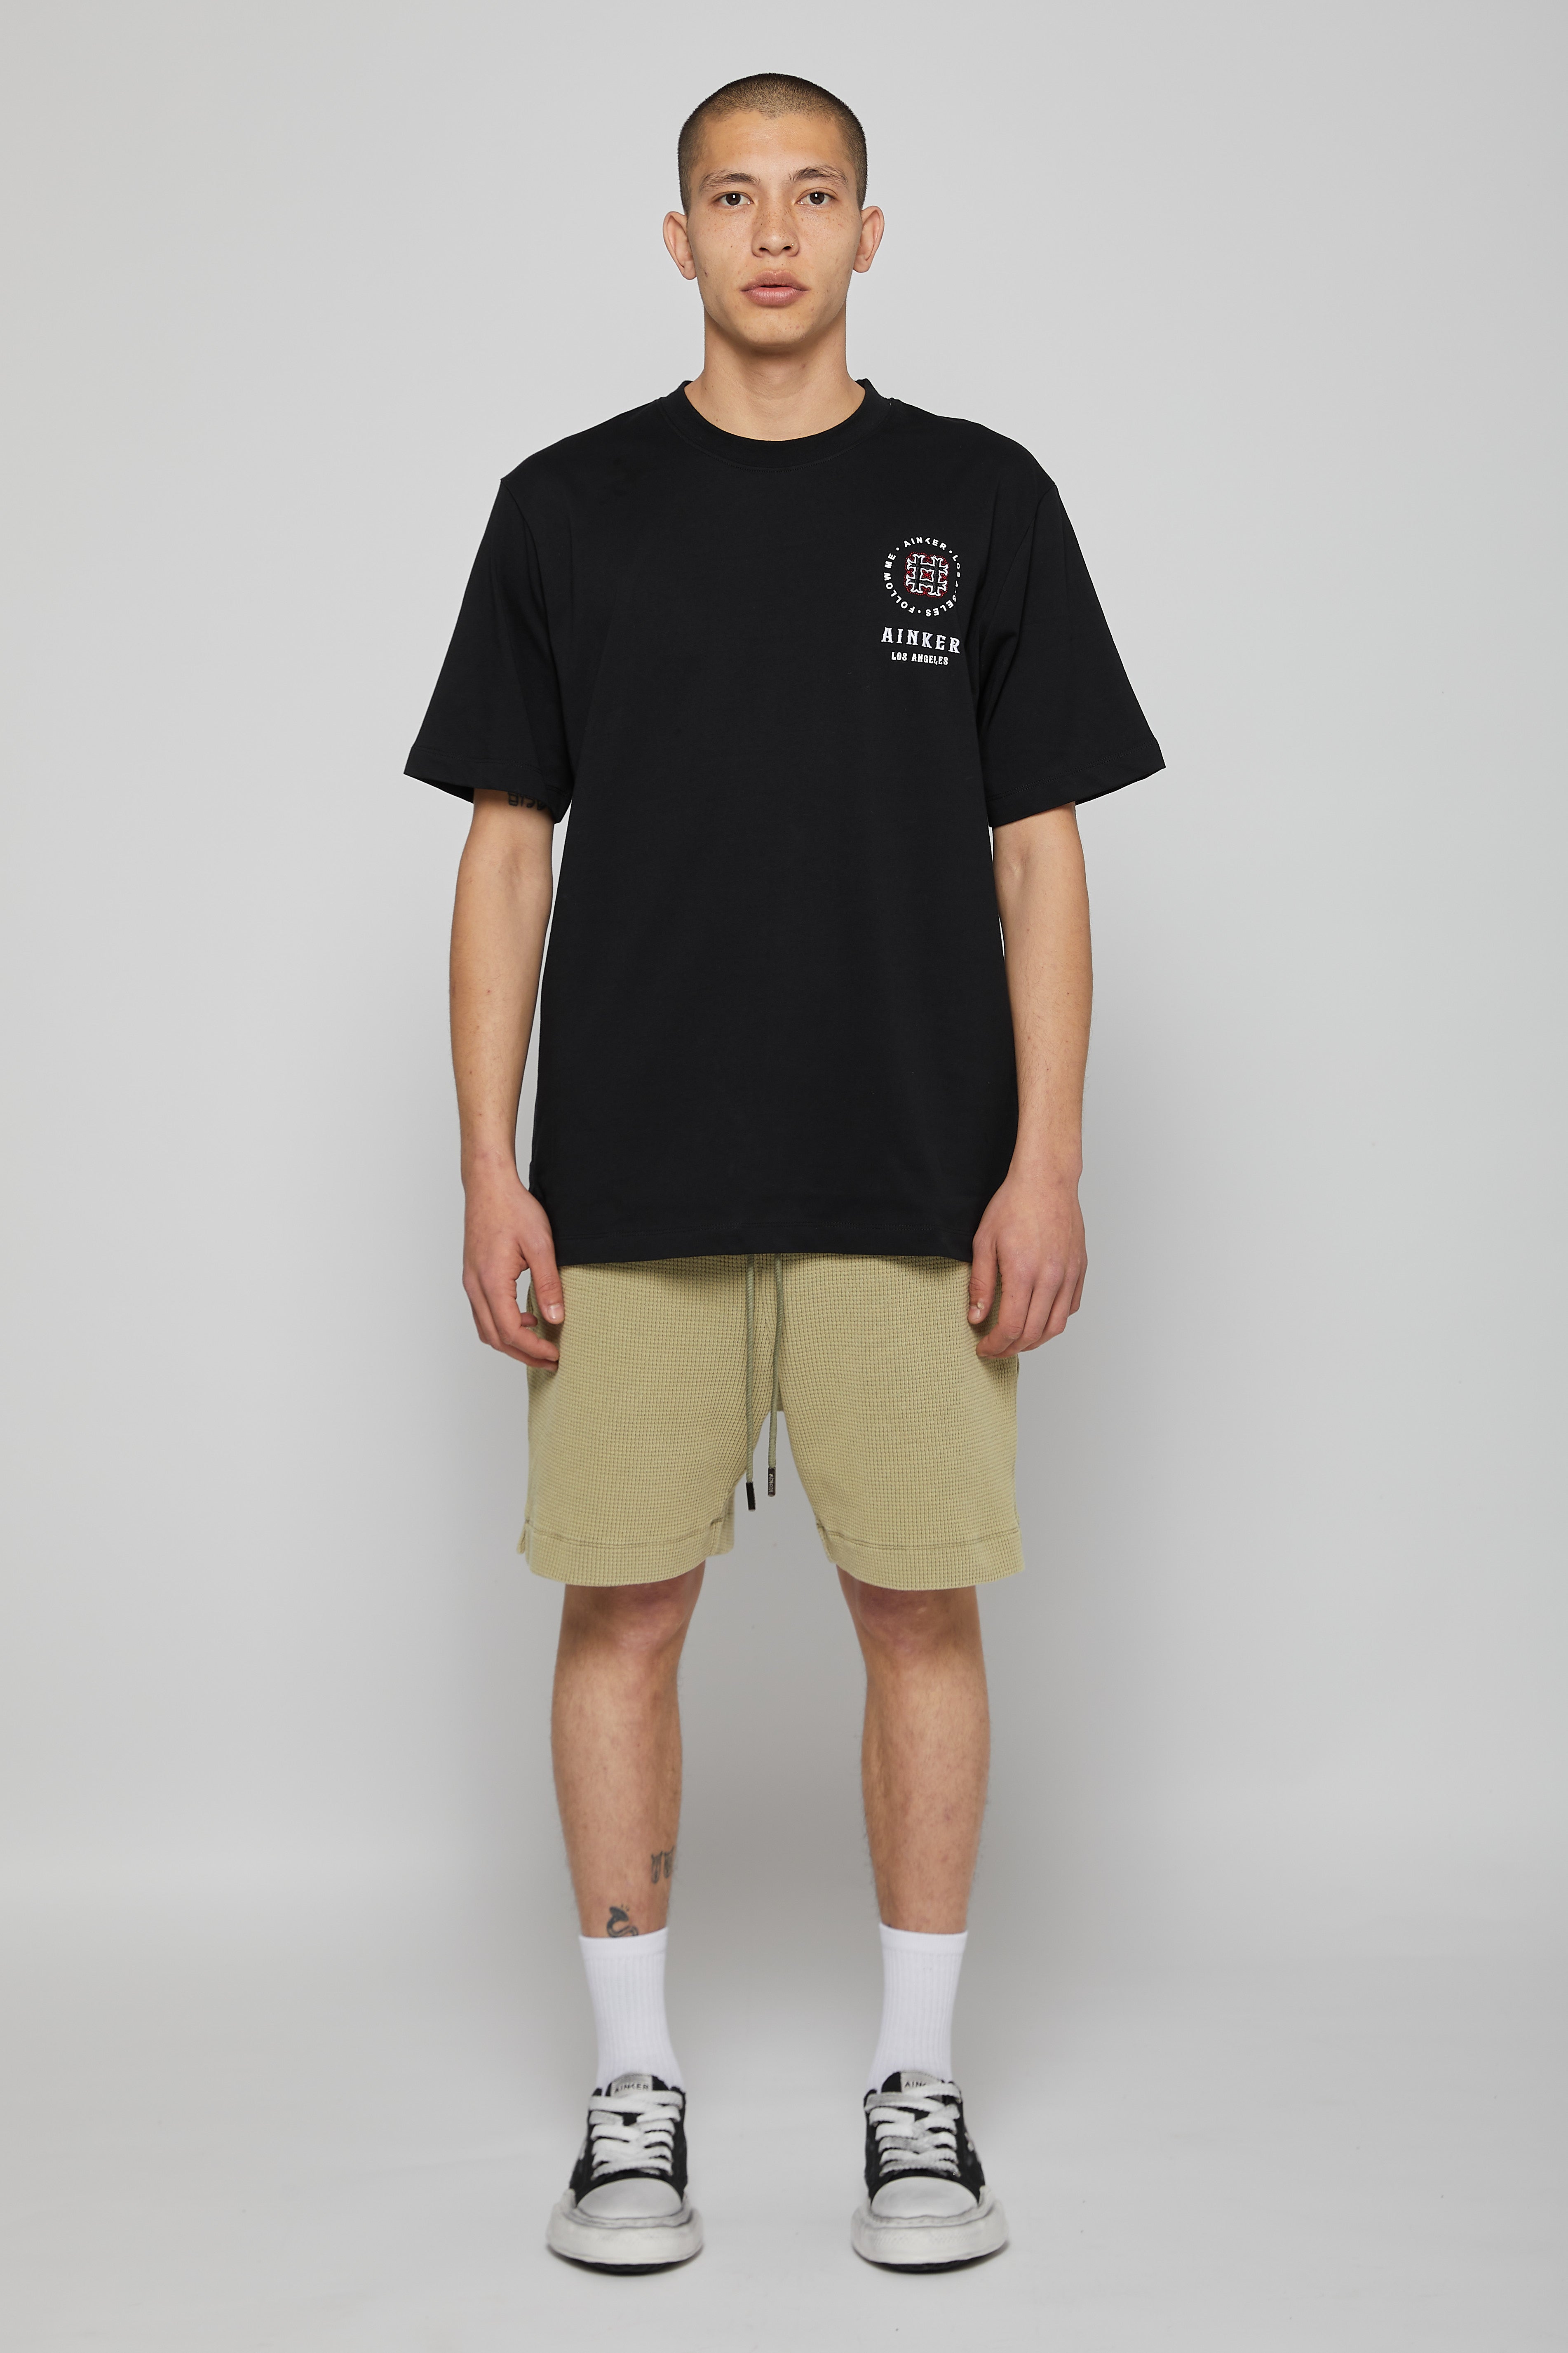 Bandana Black T-Shirt